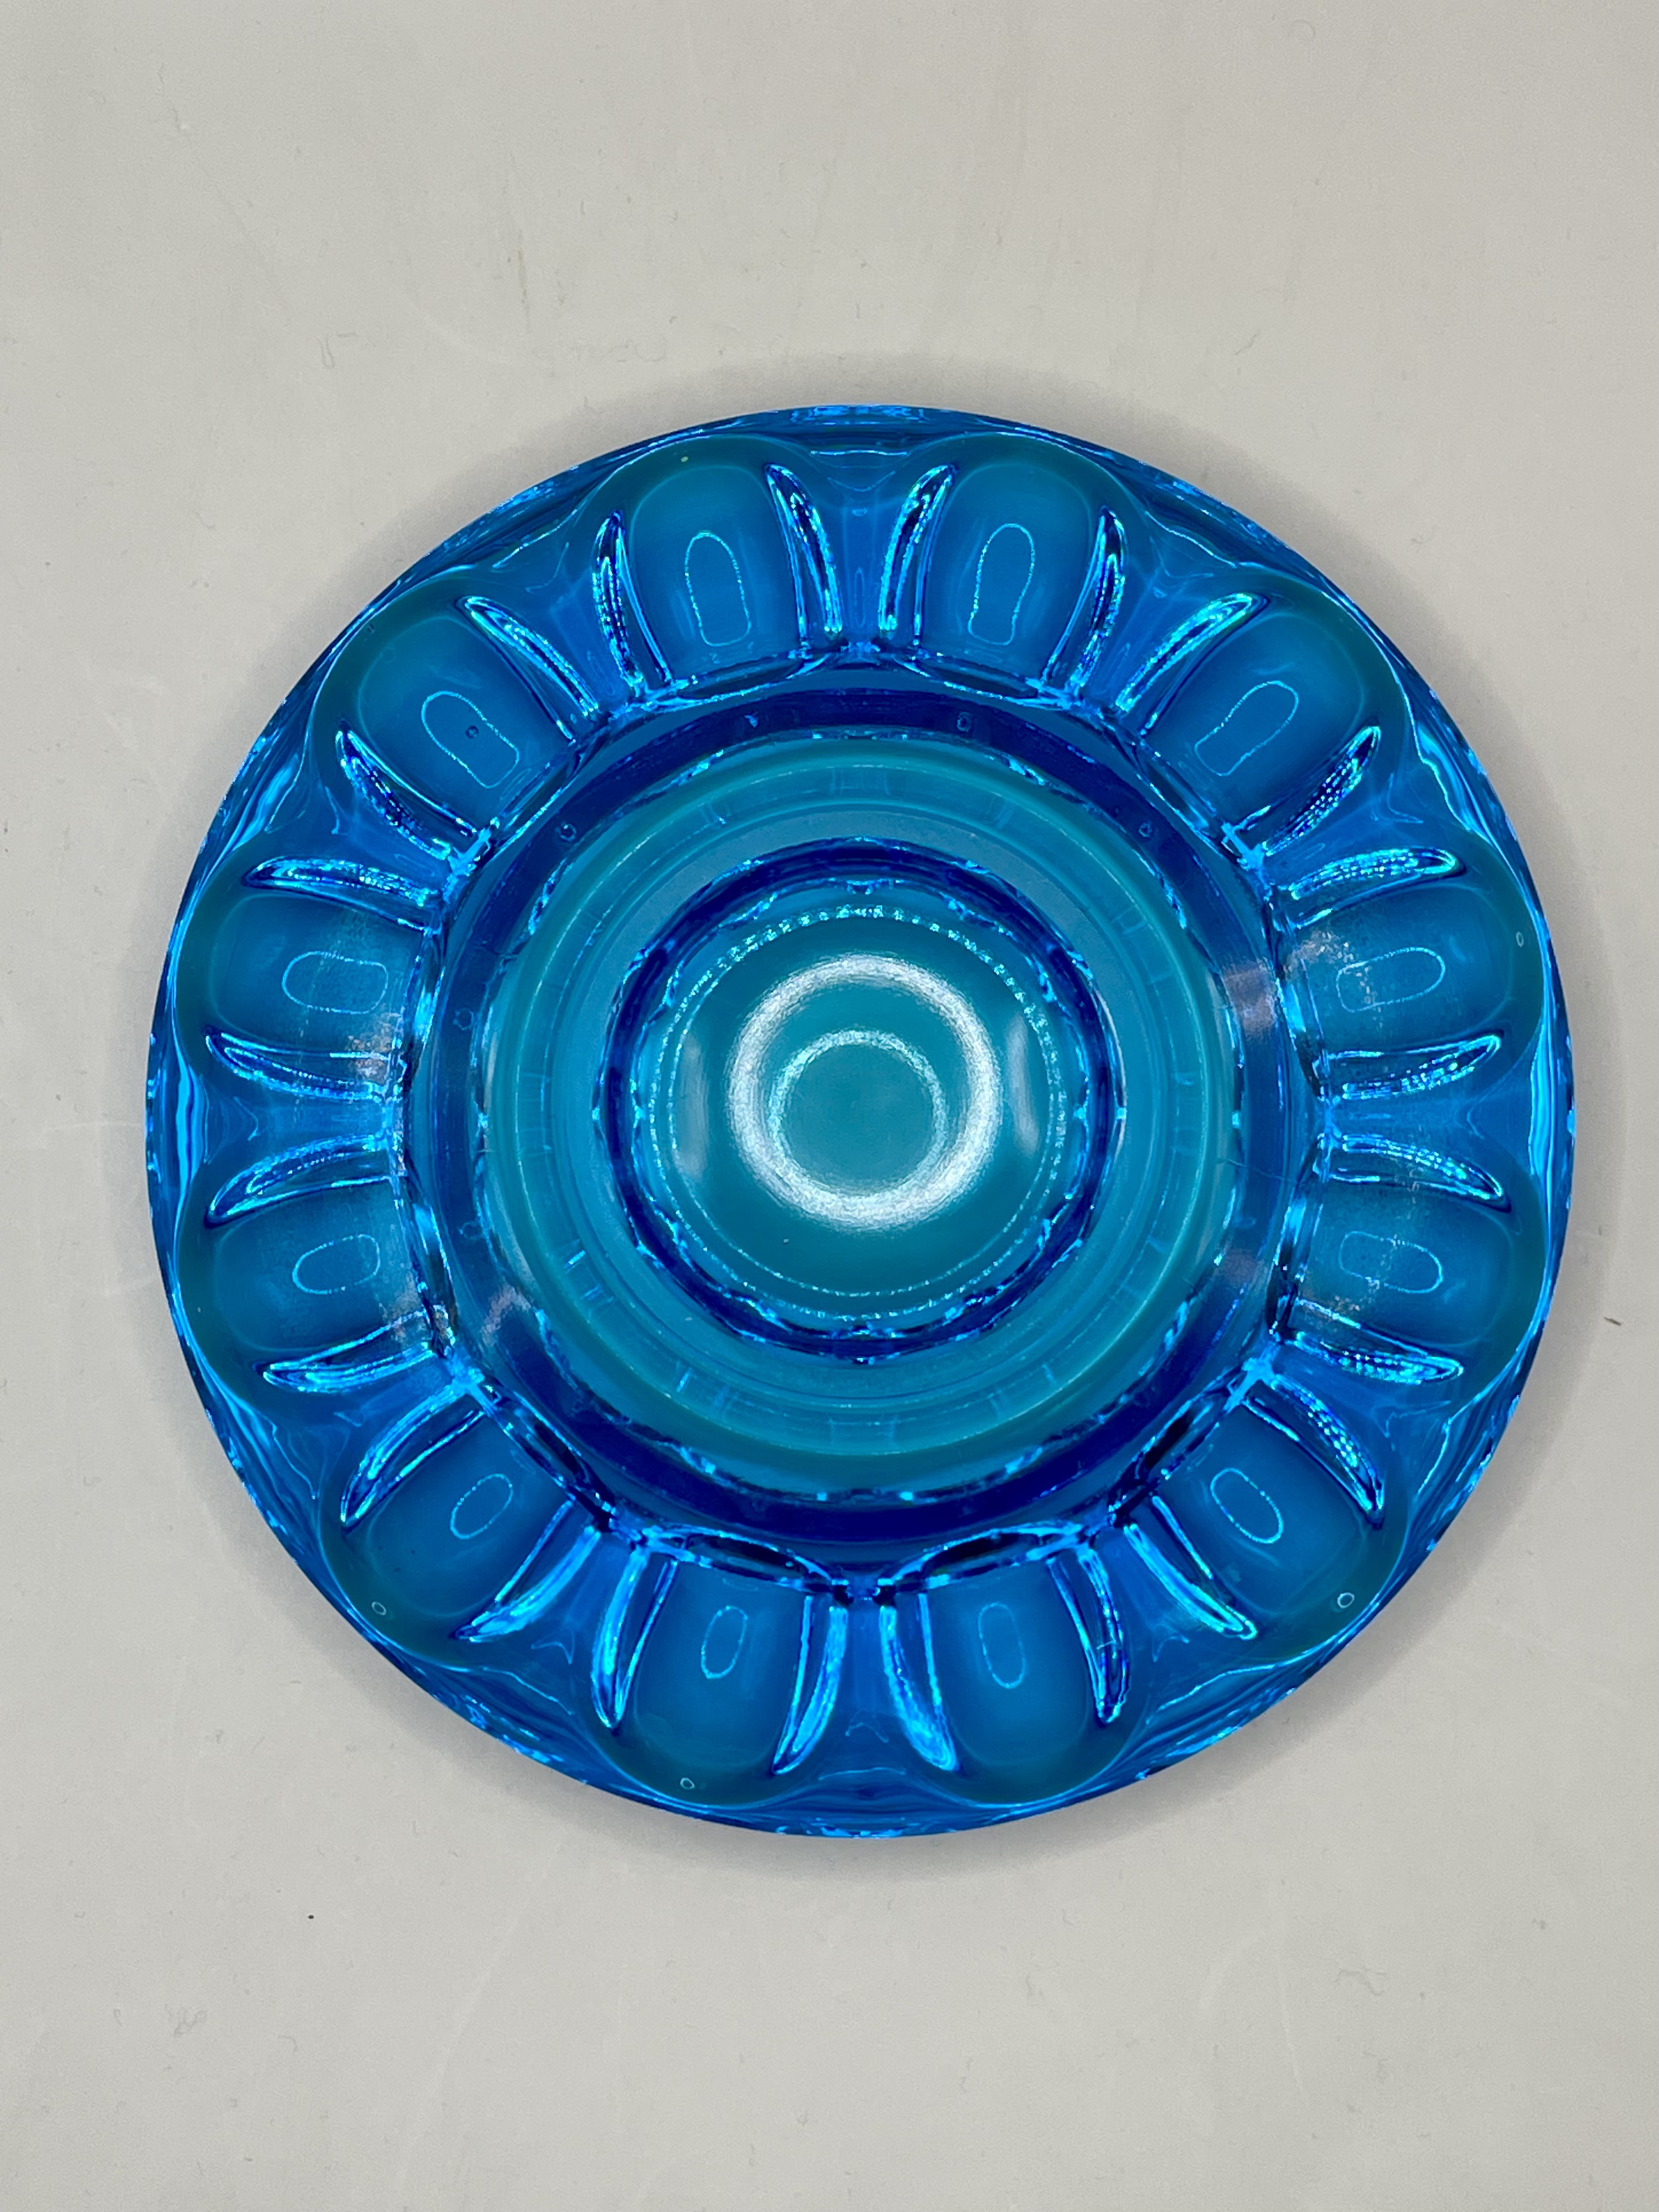 Lovely vintage heavy blue glass ashtray - UFO Shape / Design - Image 6 of 7